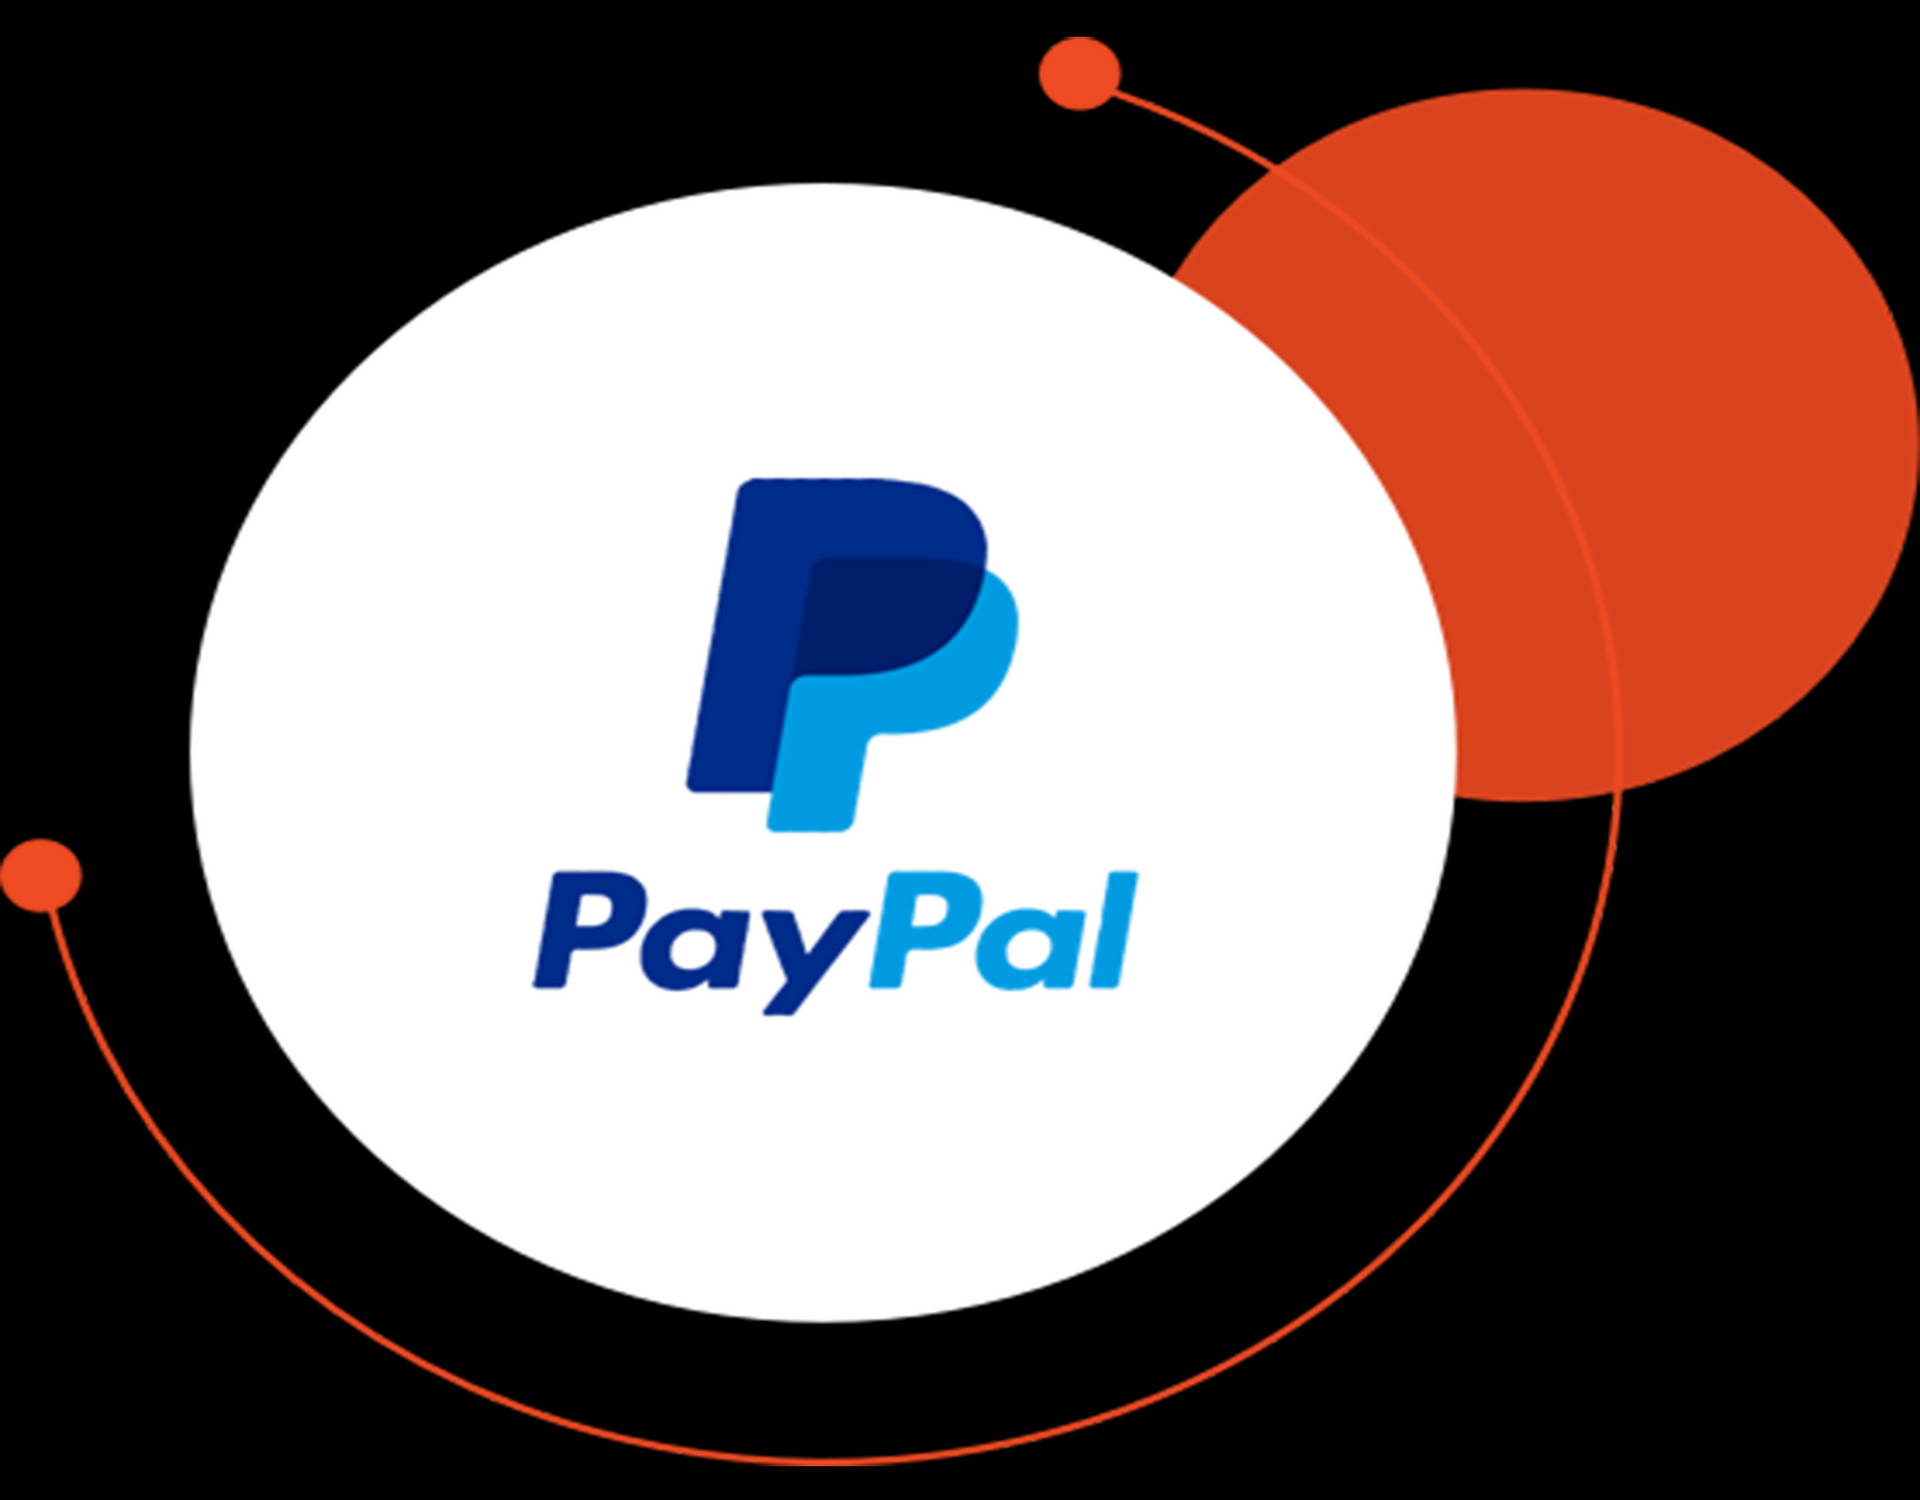 Paypal Circles Design Wallpaper